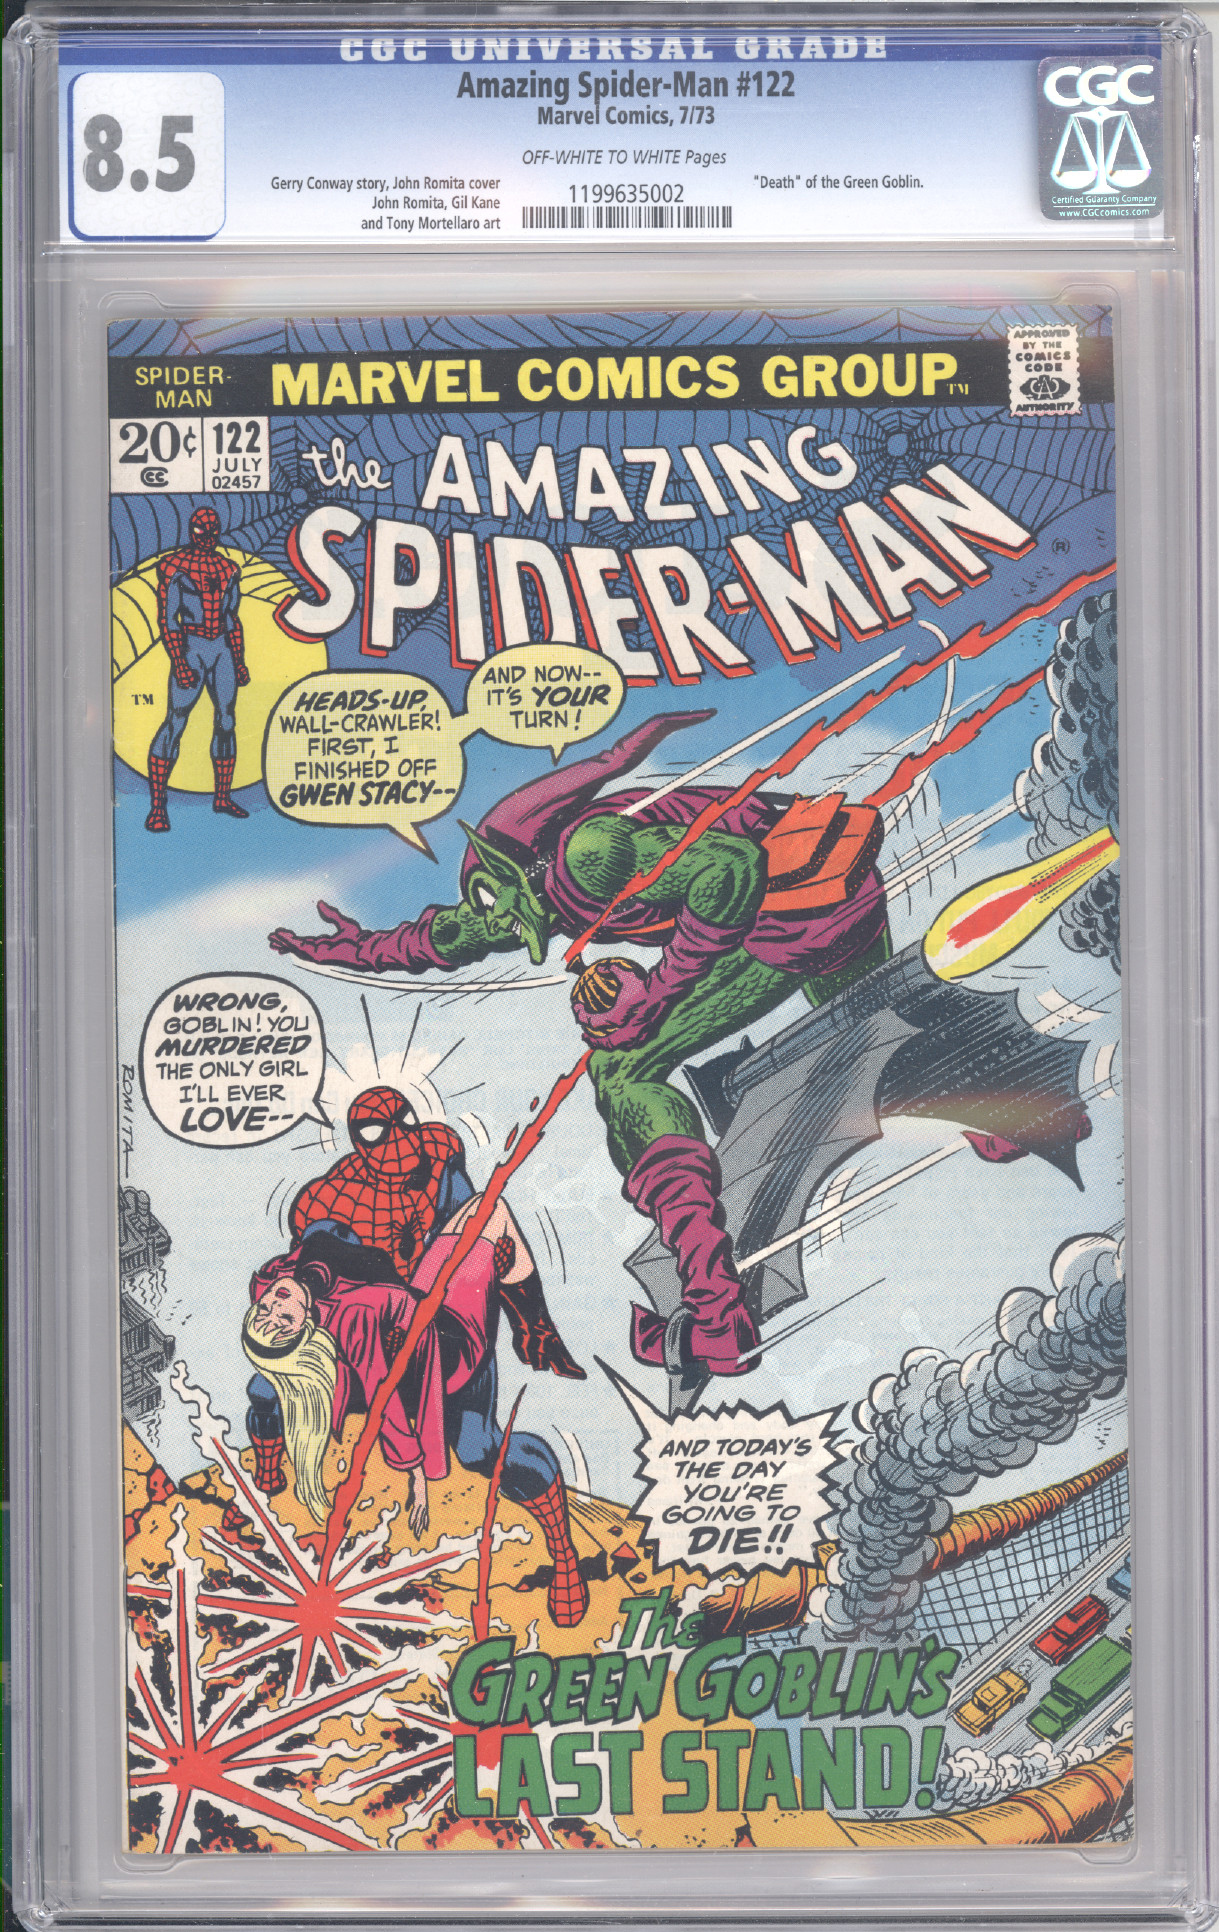 Amazing Spider-Man #122 front